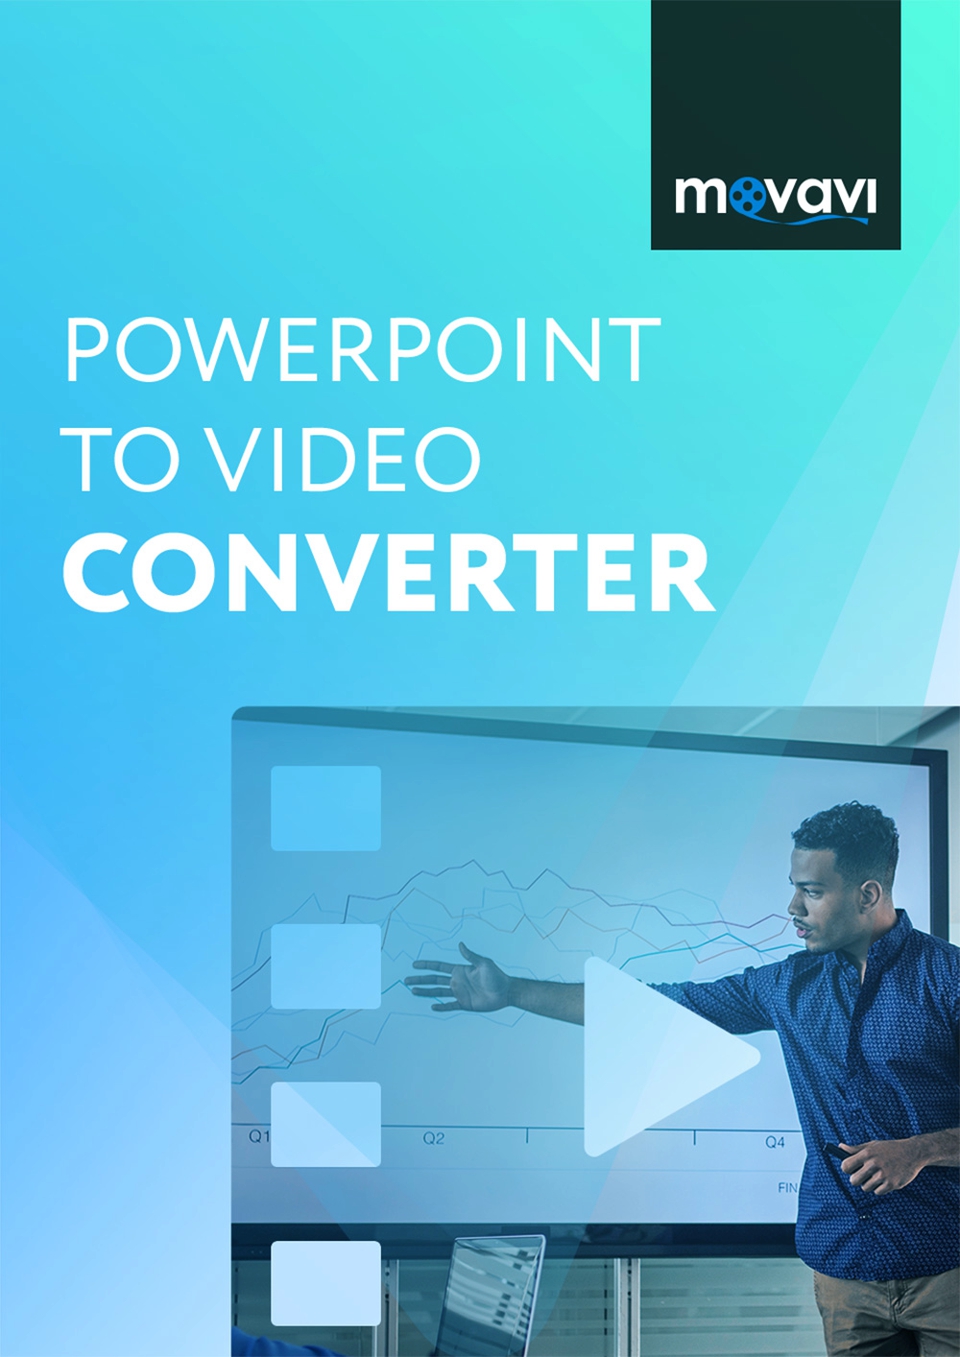 movavi powerpoint to video converter 2.2 1 full crack